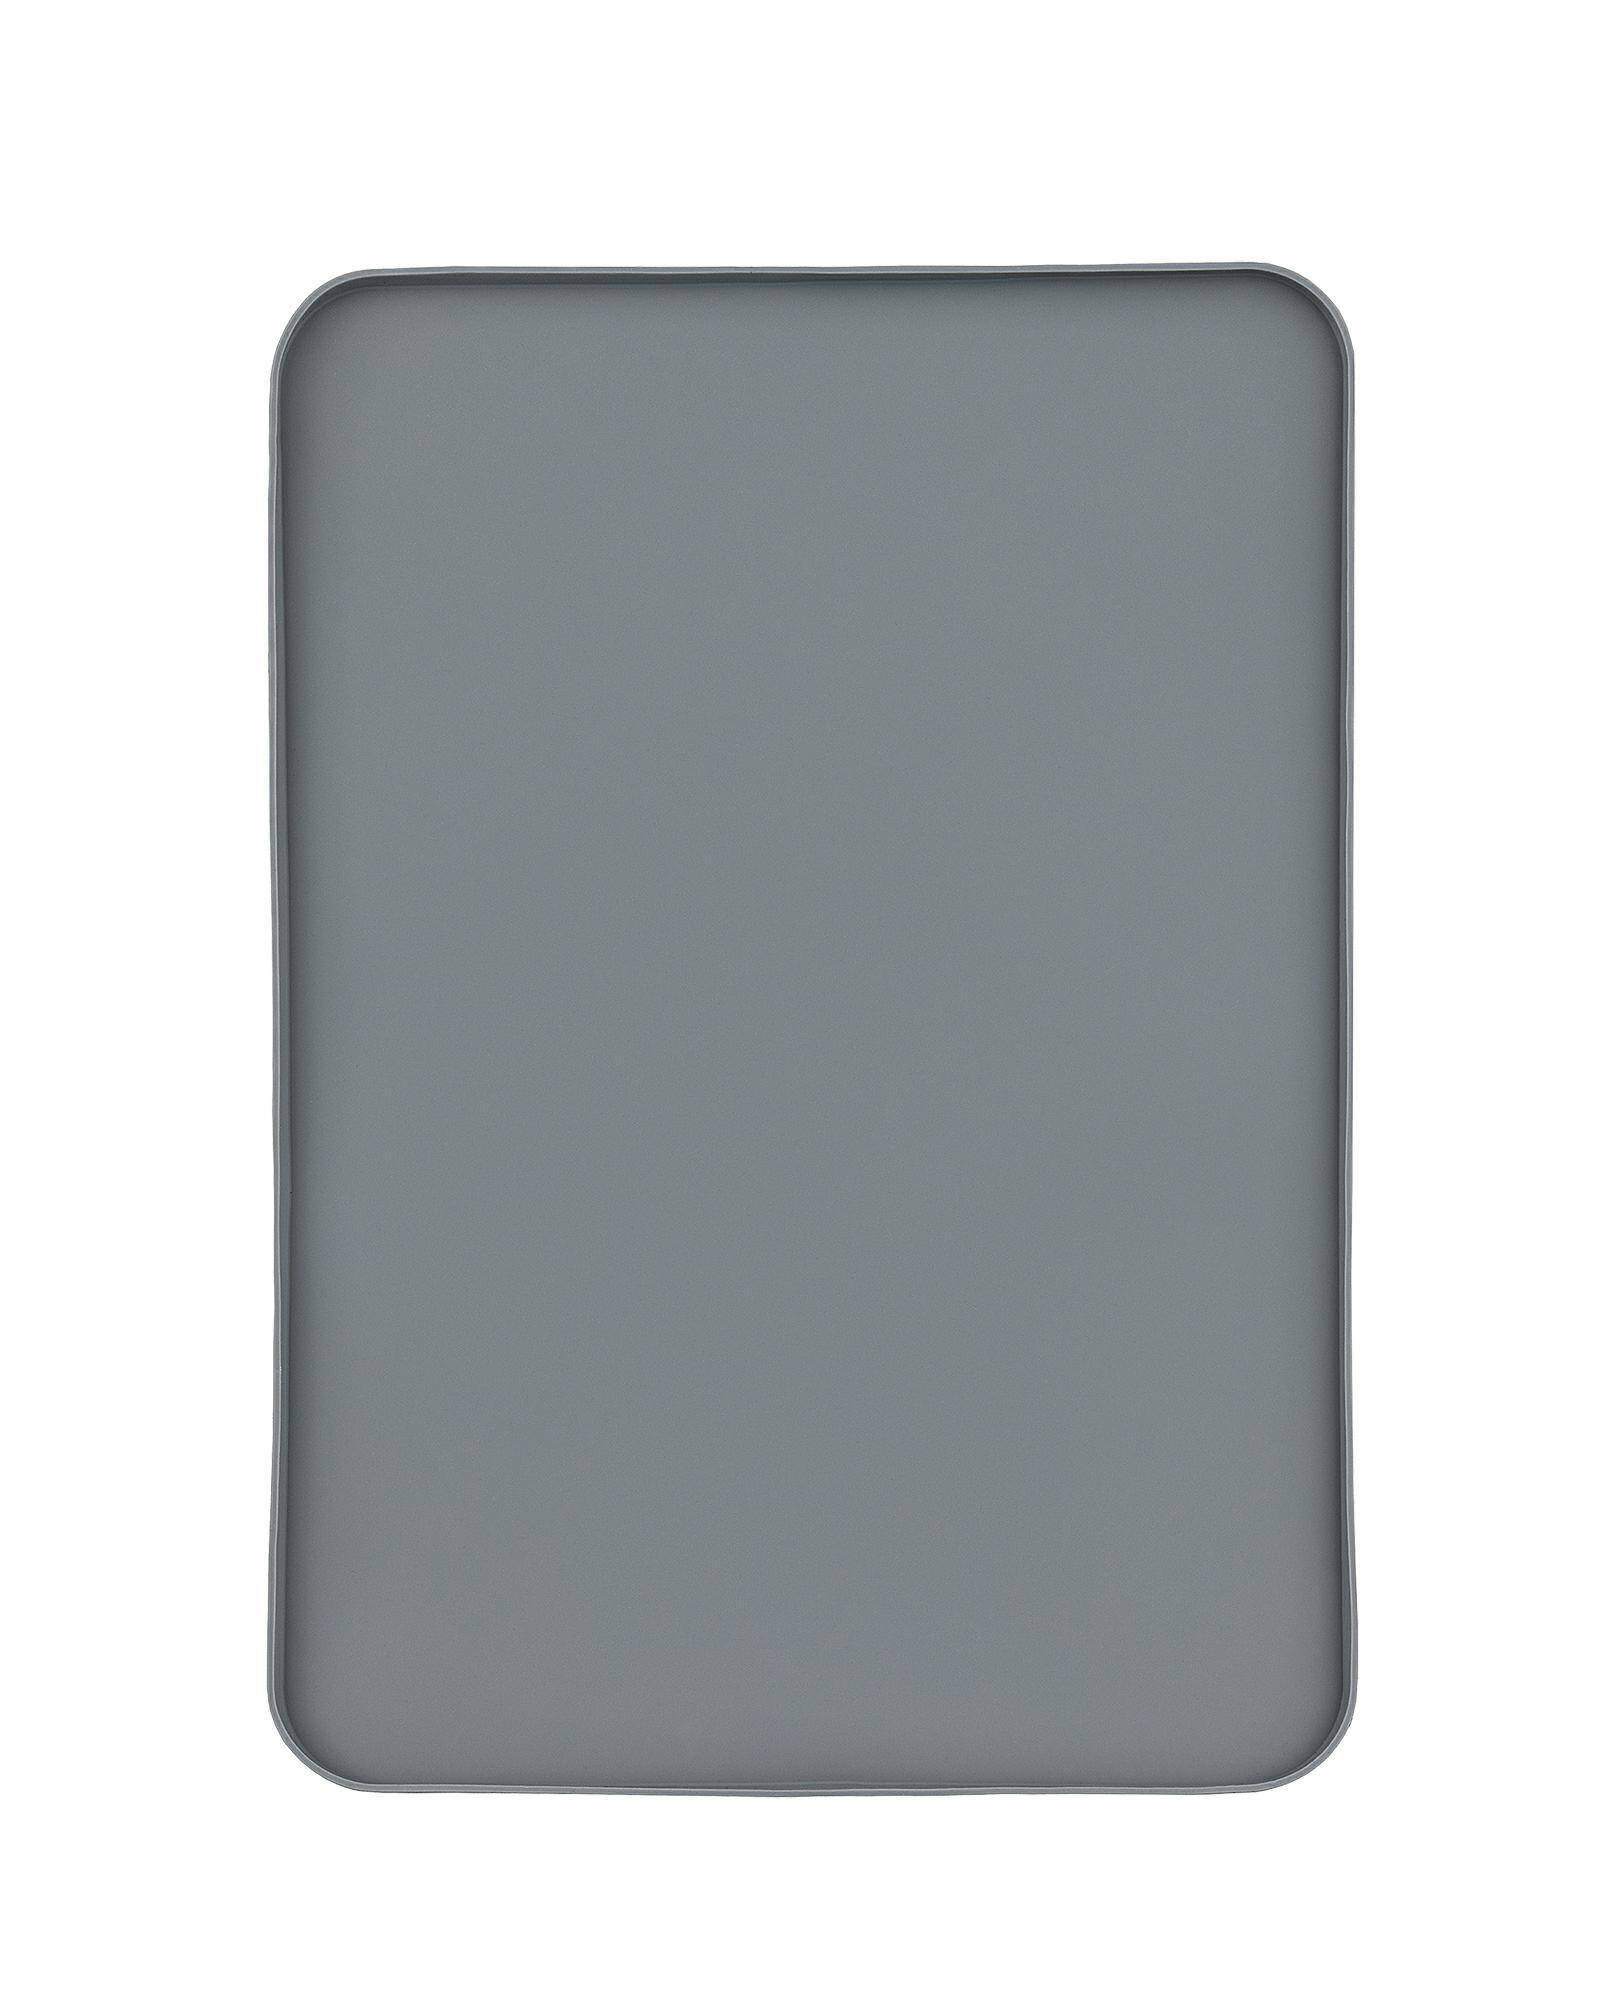 Silicone mat gray 42x30cm M (Photo 5)